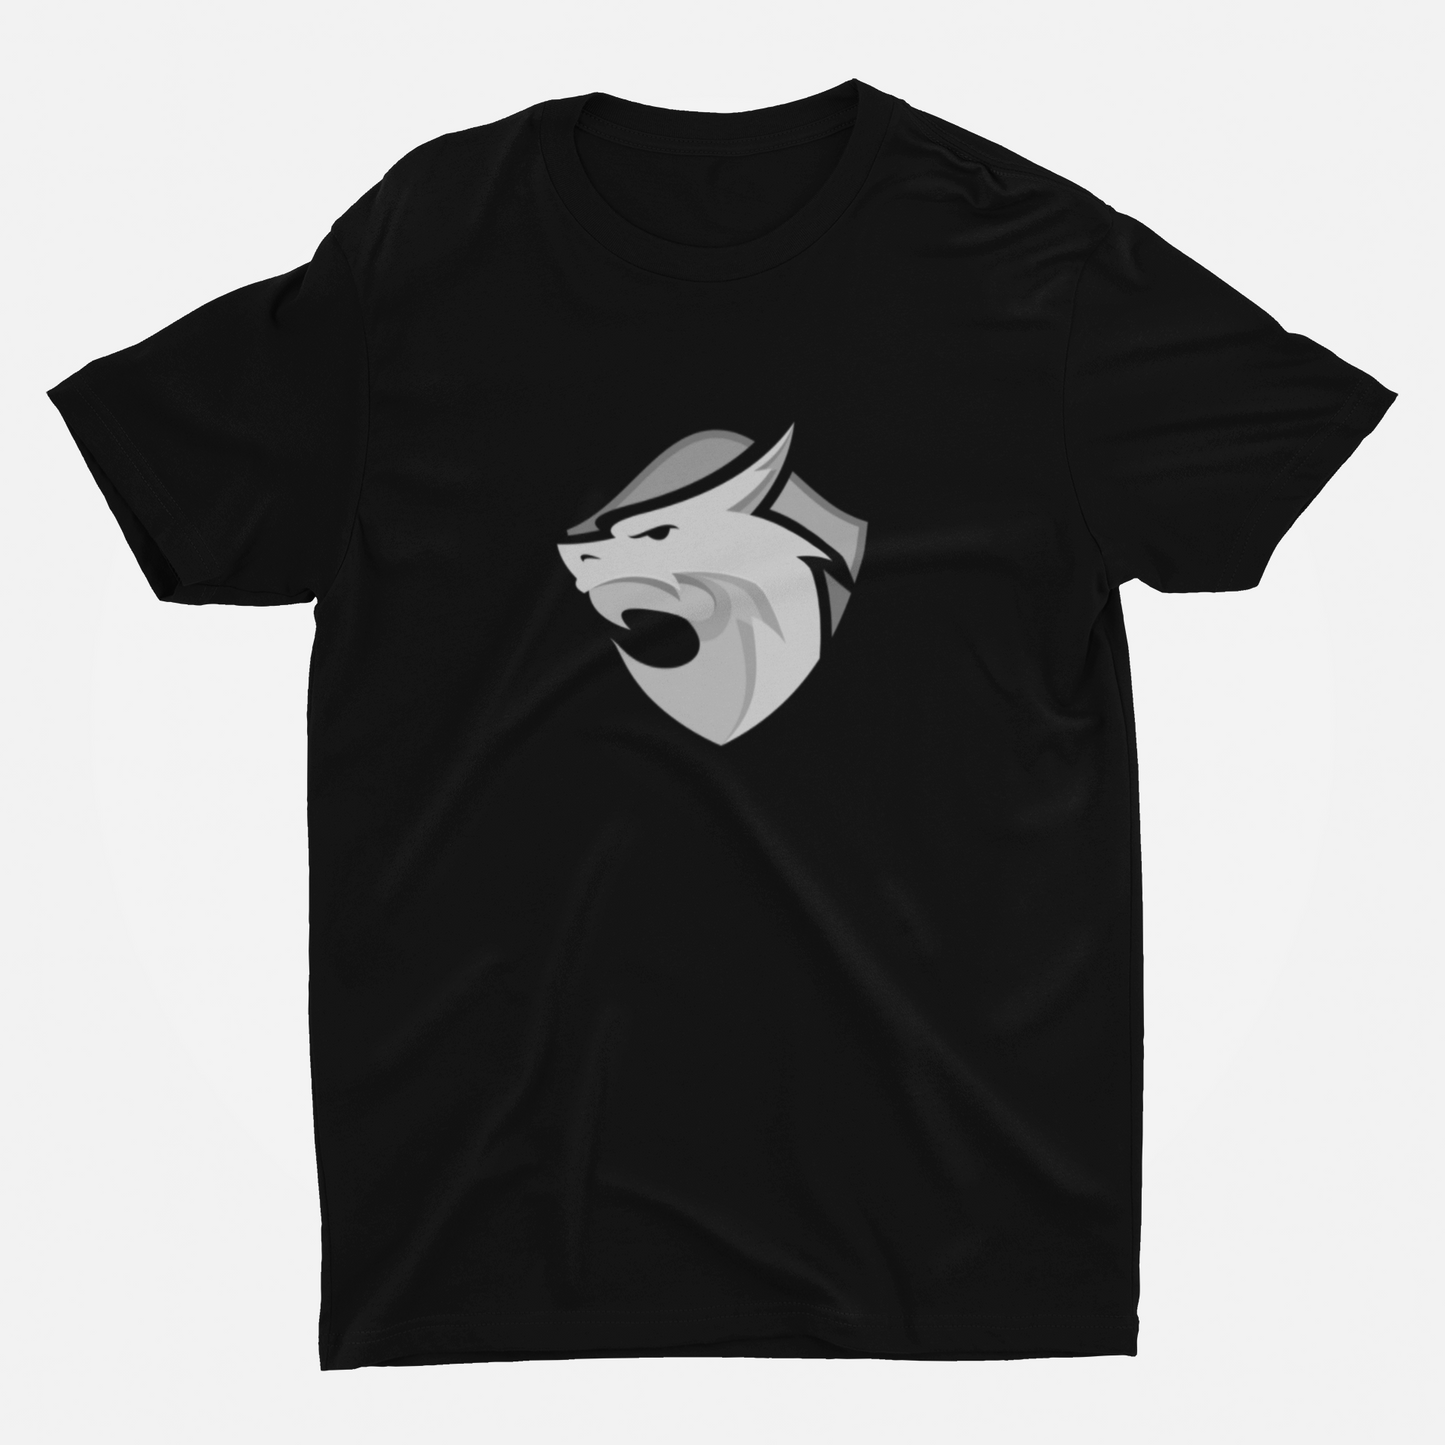 Wild Animal Black Round Neck T-Shirt for Men